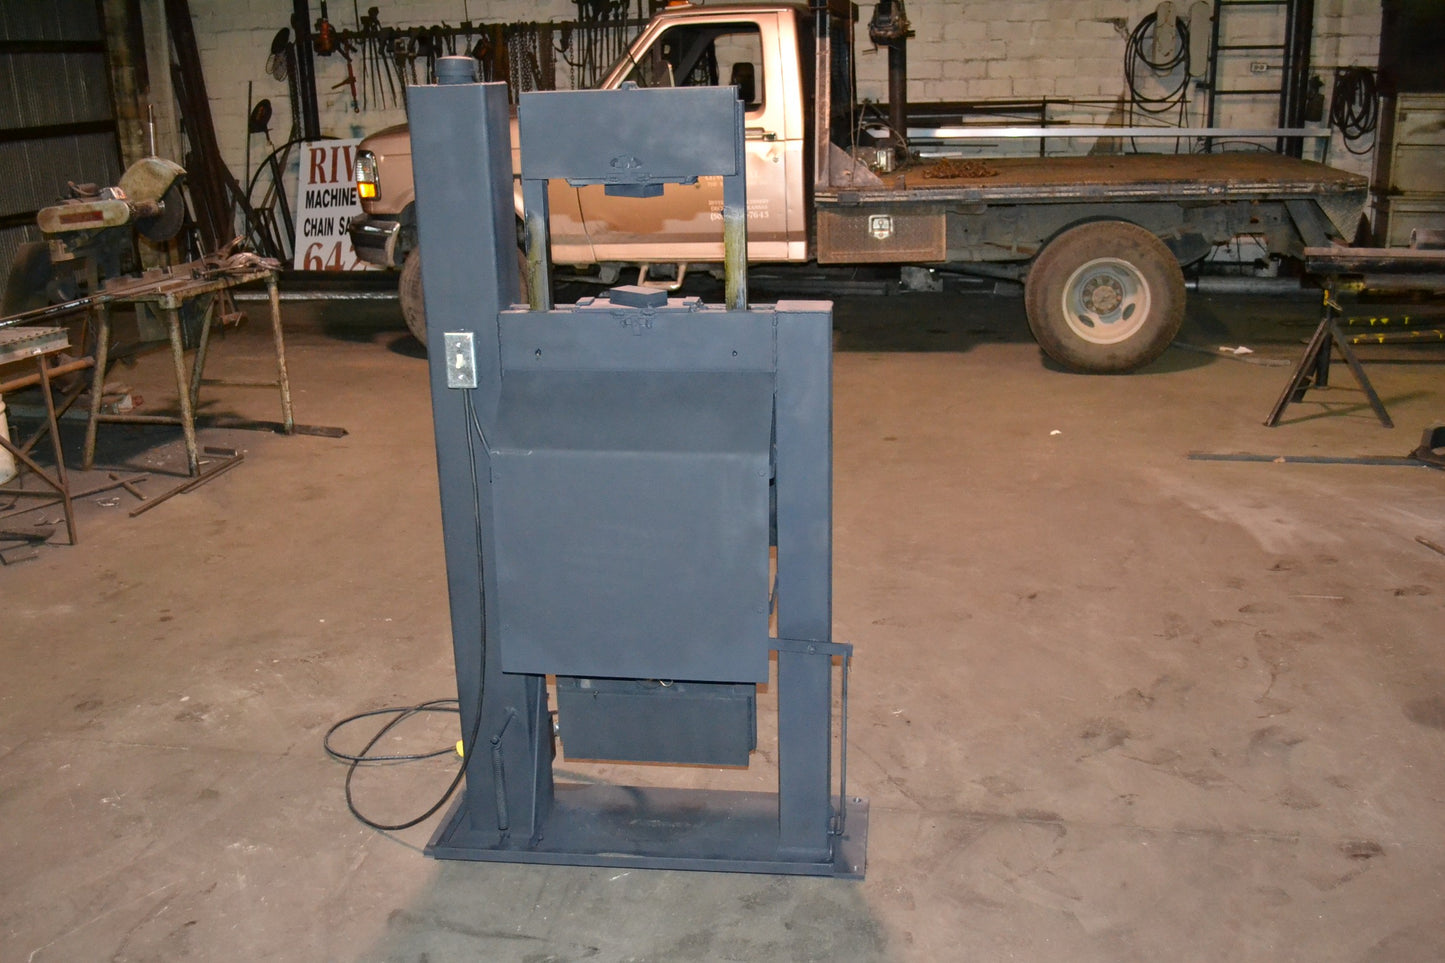 Uncleal's Hydraulic Press – Riverside Machine